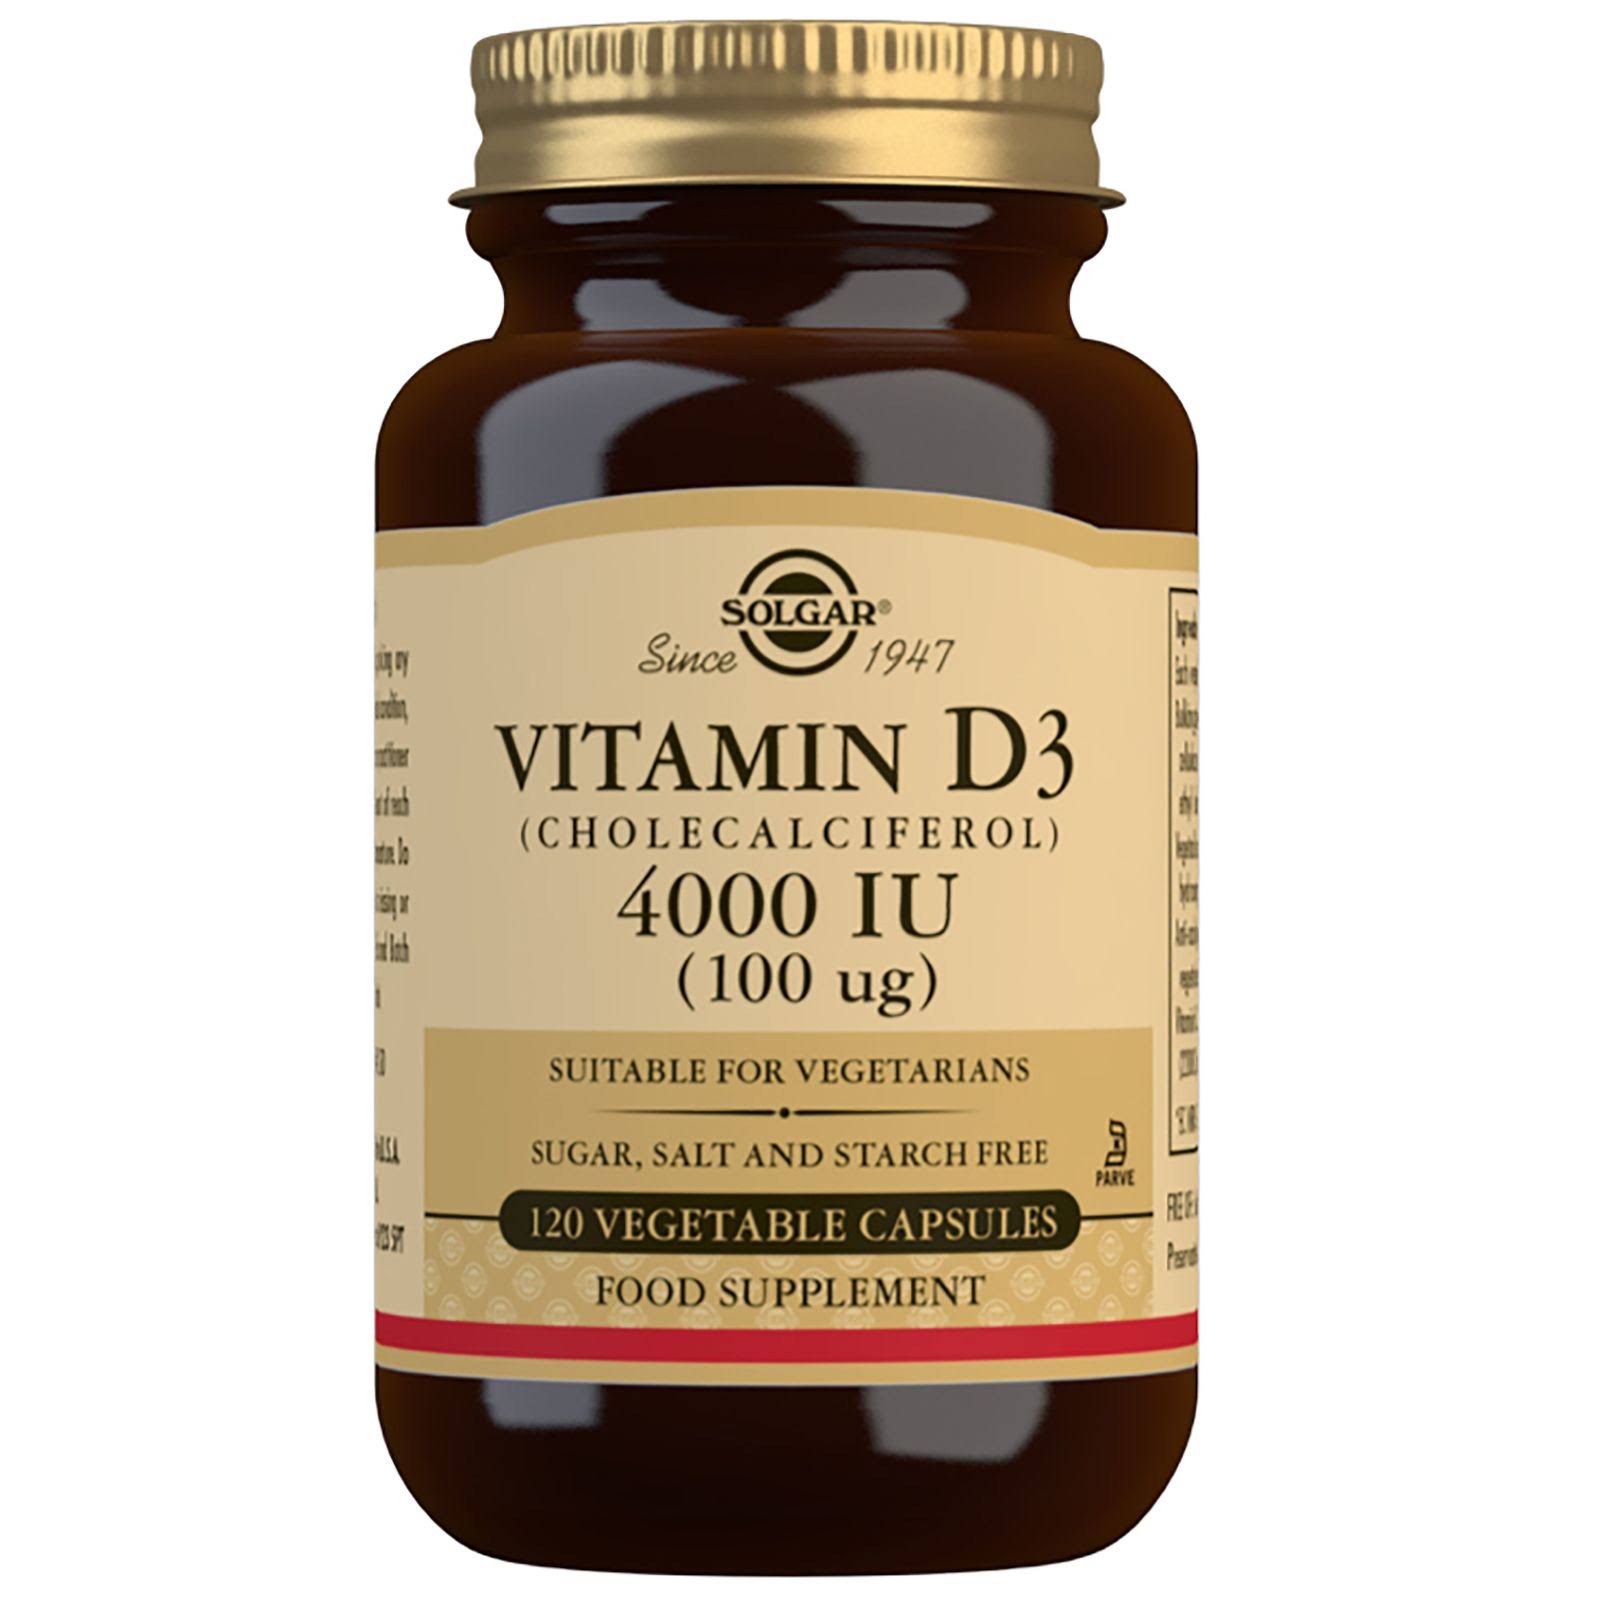 Solgar Vitamin D3 Supplement - 120 Vegetable Capsules